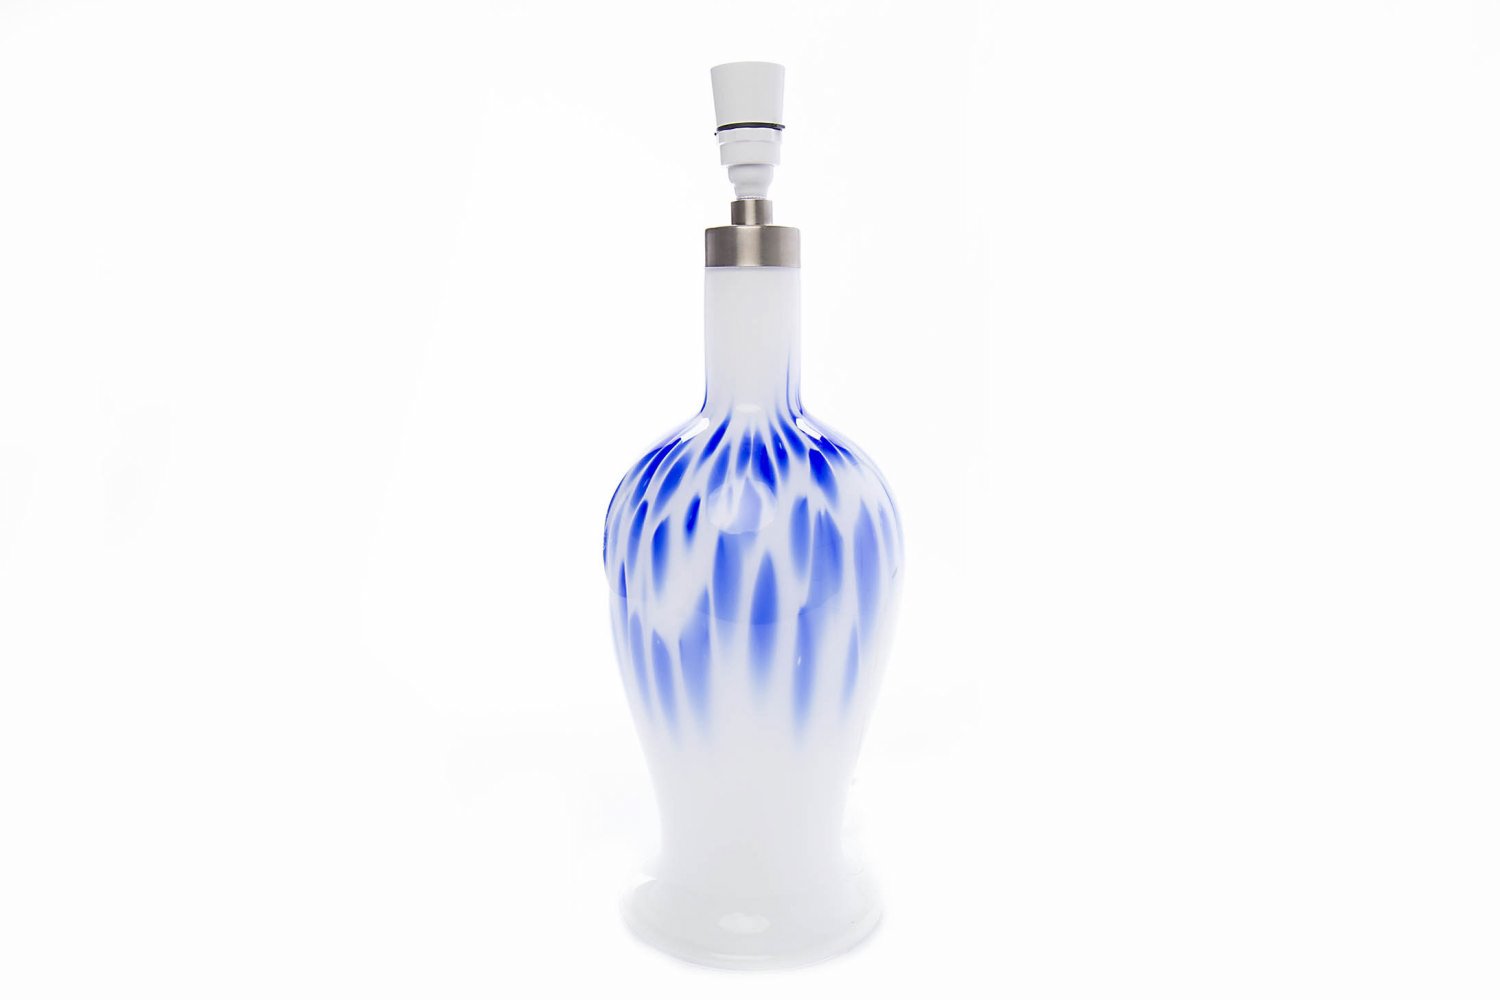 MODERN ROYAL COPENHAGEN TORINO BALUSTER GLASS TABLE LAMP the opaque white body with irregular blue